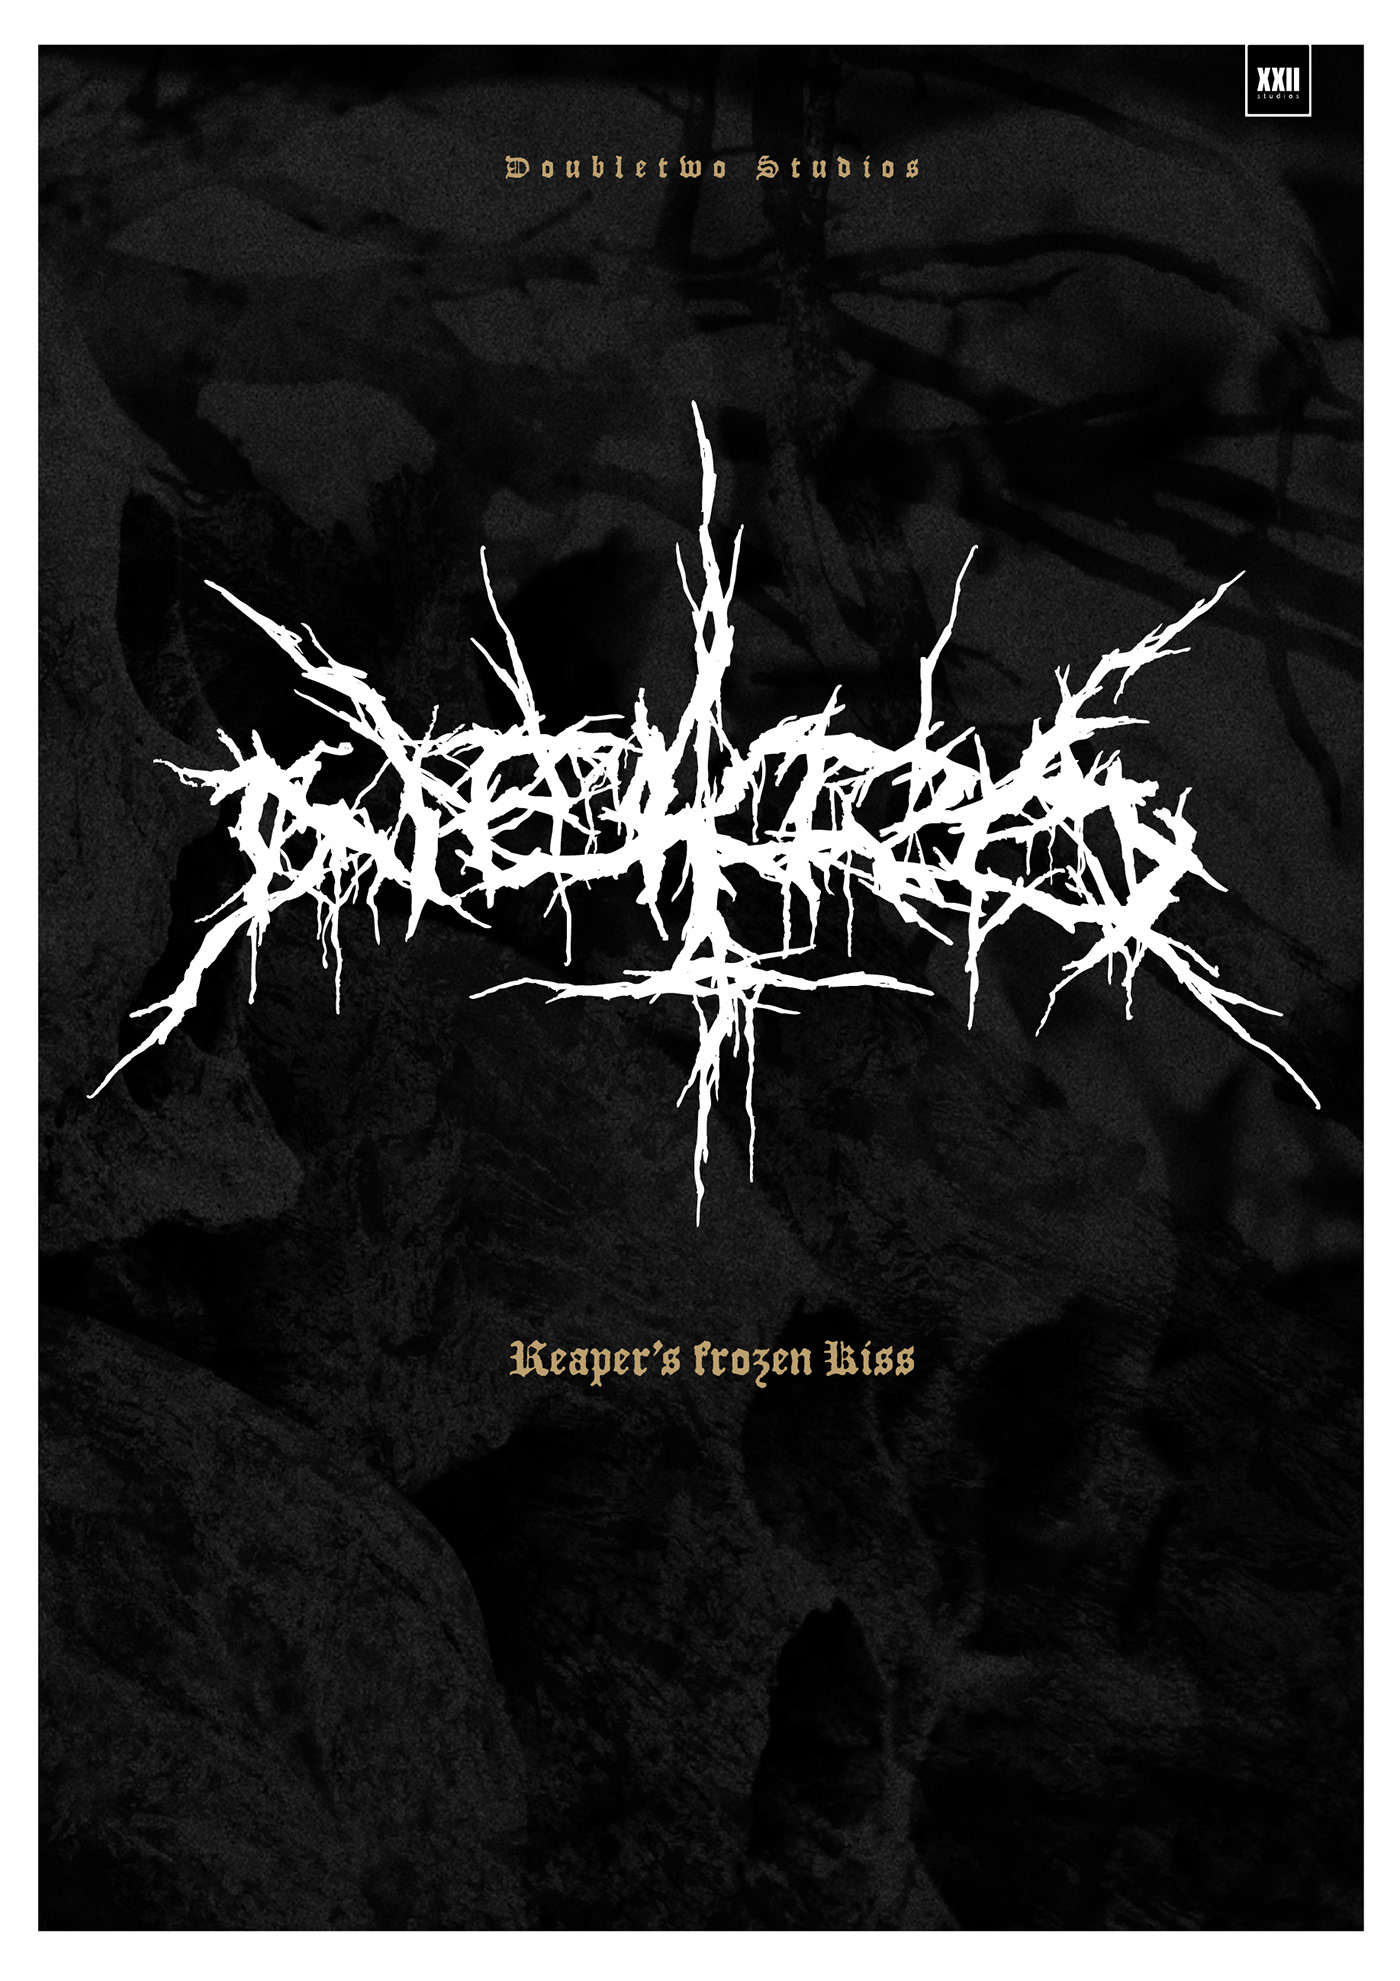 death metal black metal extreme music metal font horror grindcore